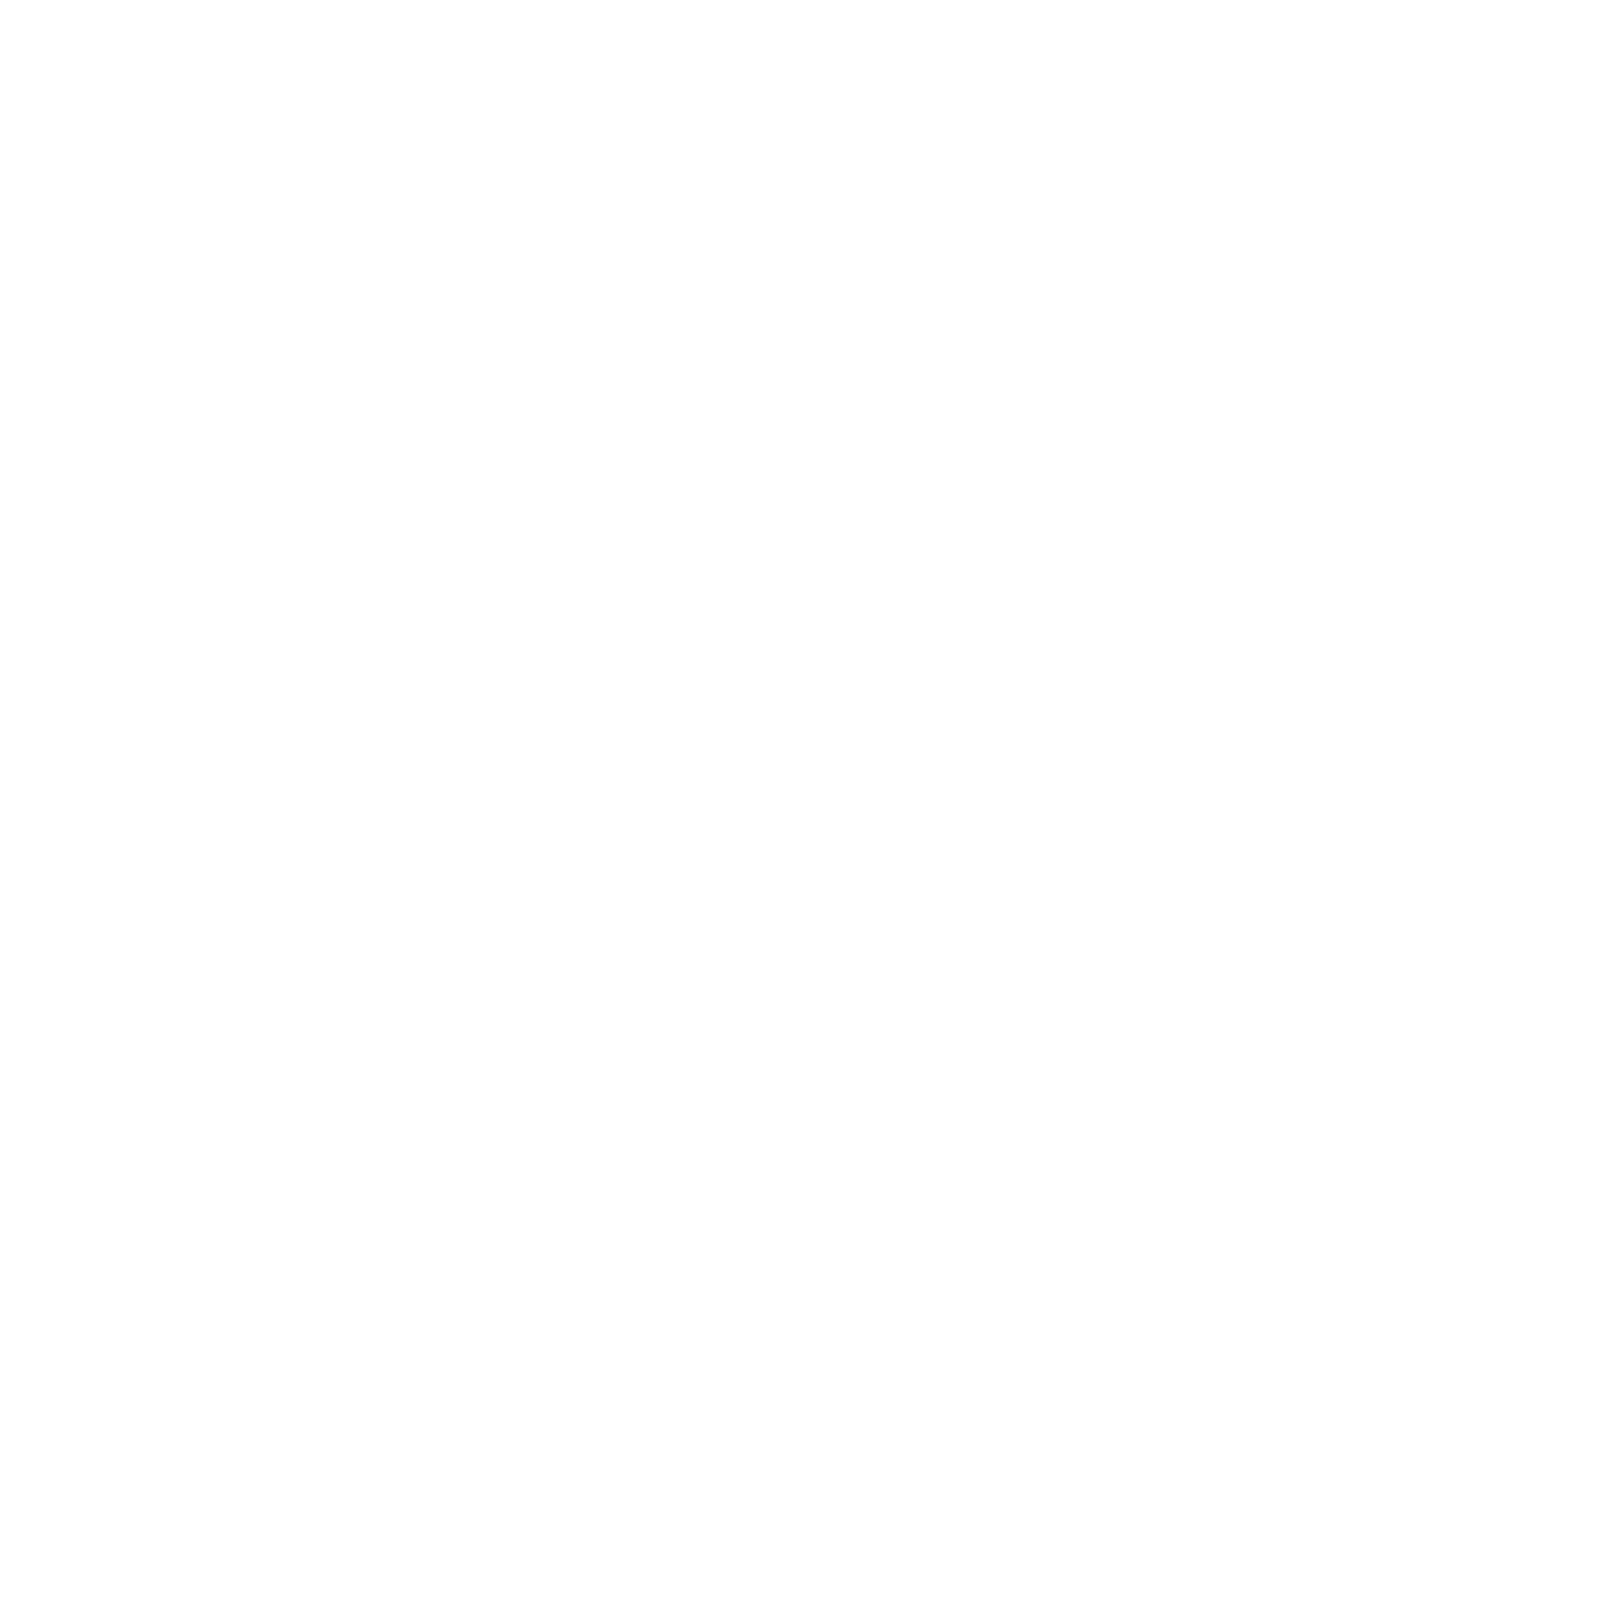 Video Igniter logo on a transparent backdrop.